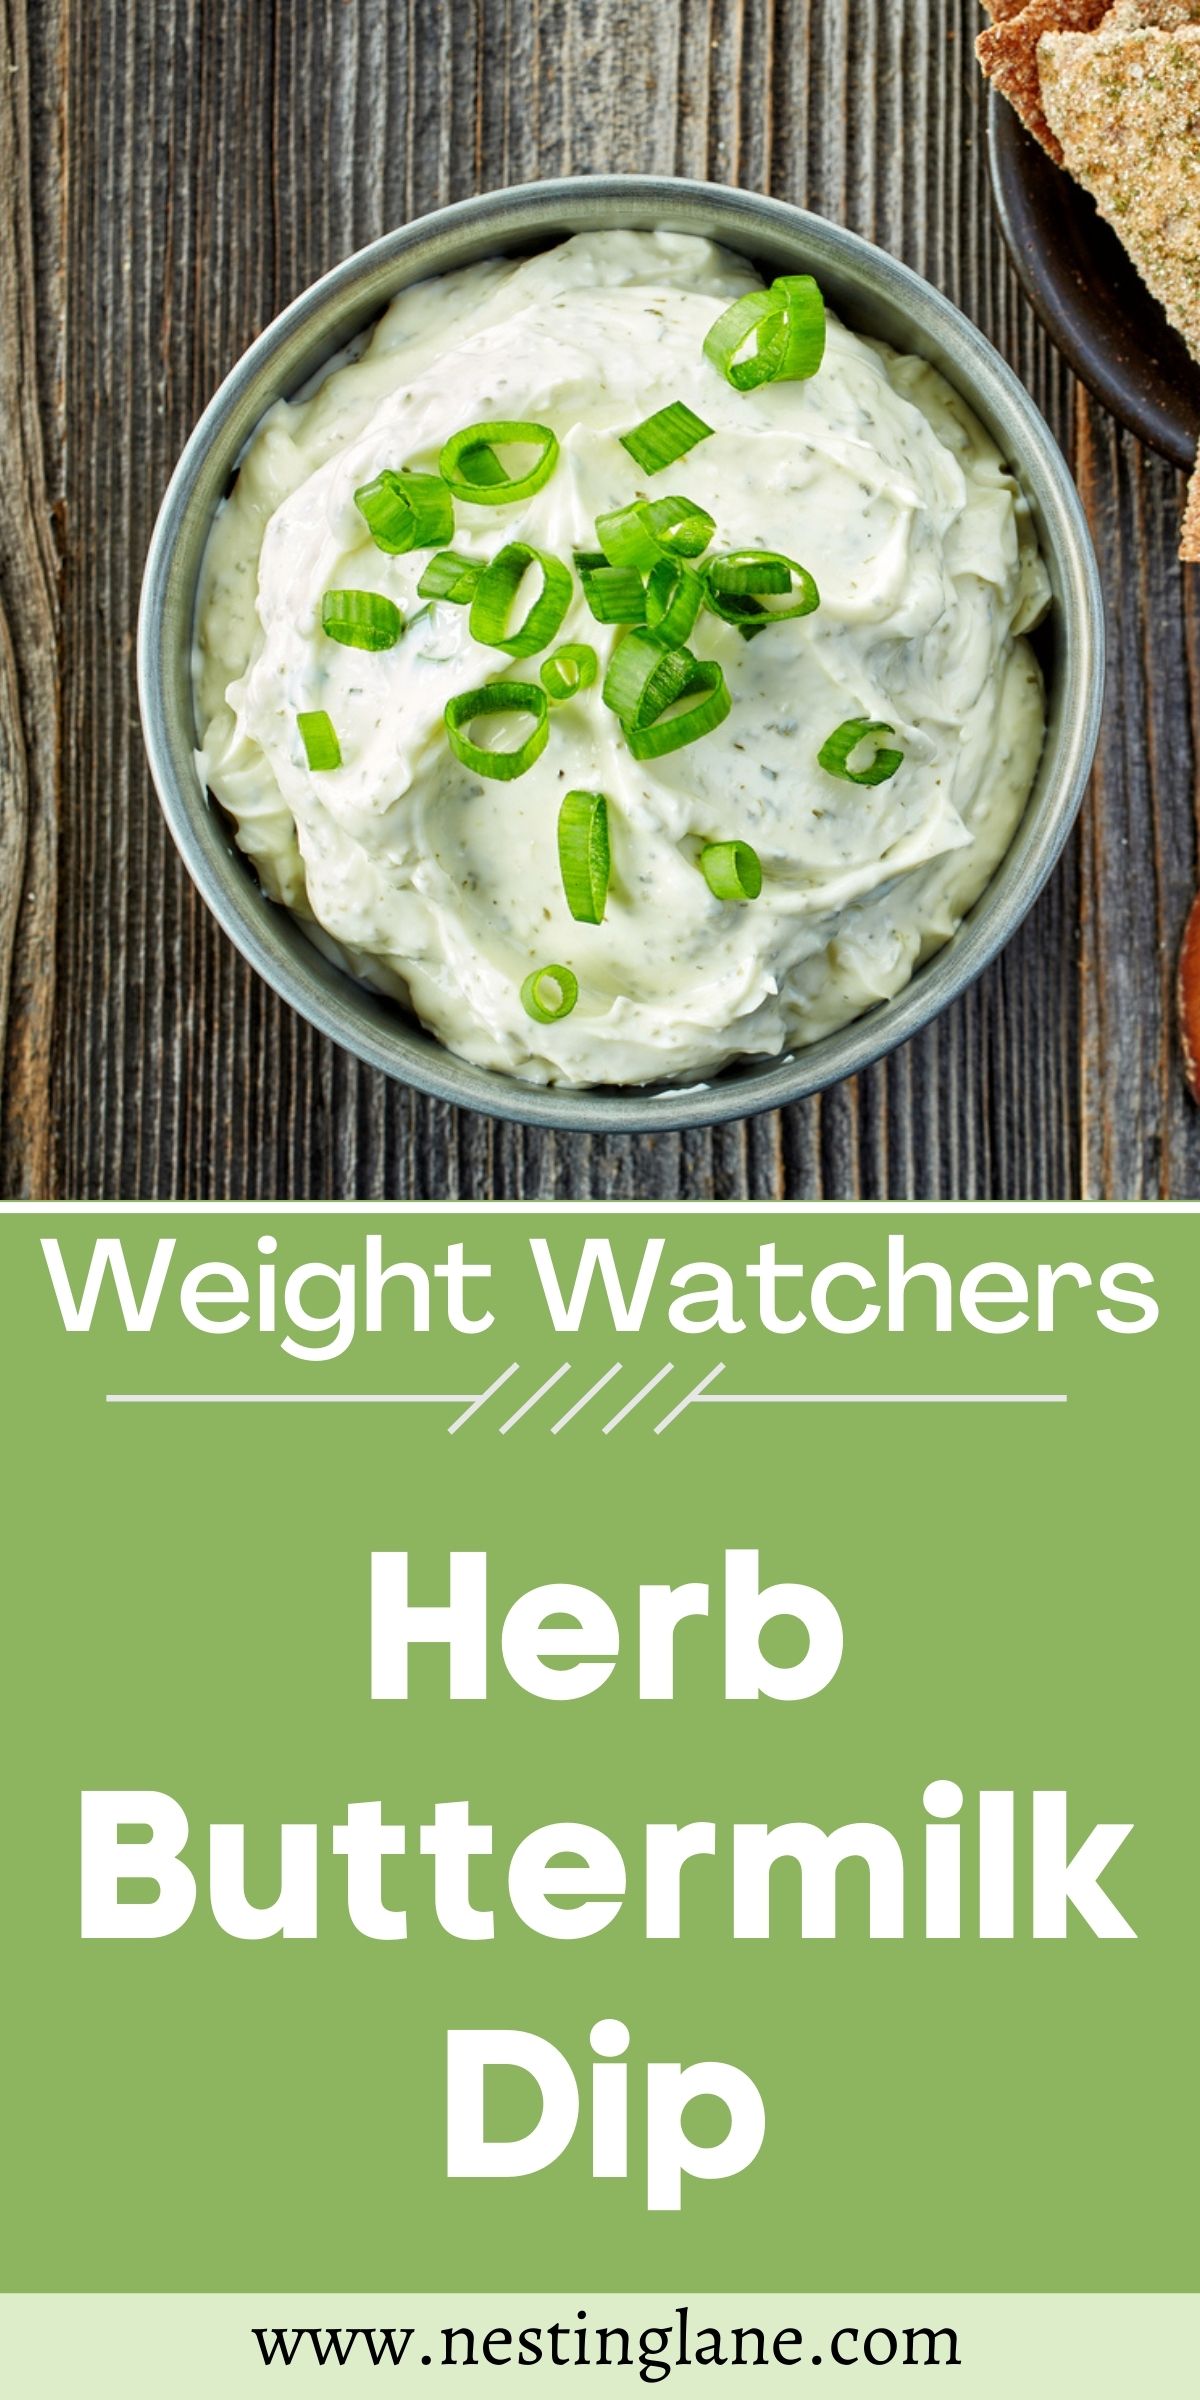 Graphic for Pinterest of Weight Watchers Herb Buttermilk Dip Recipe.